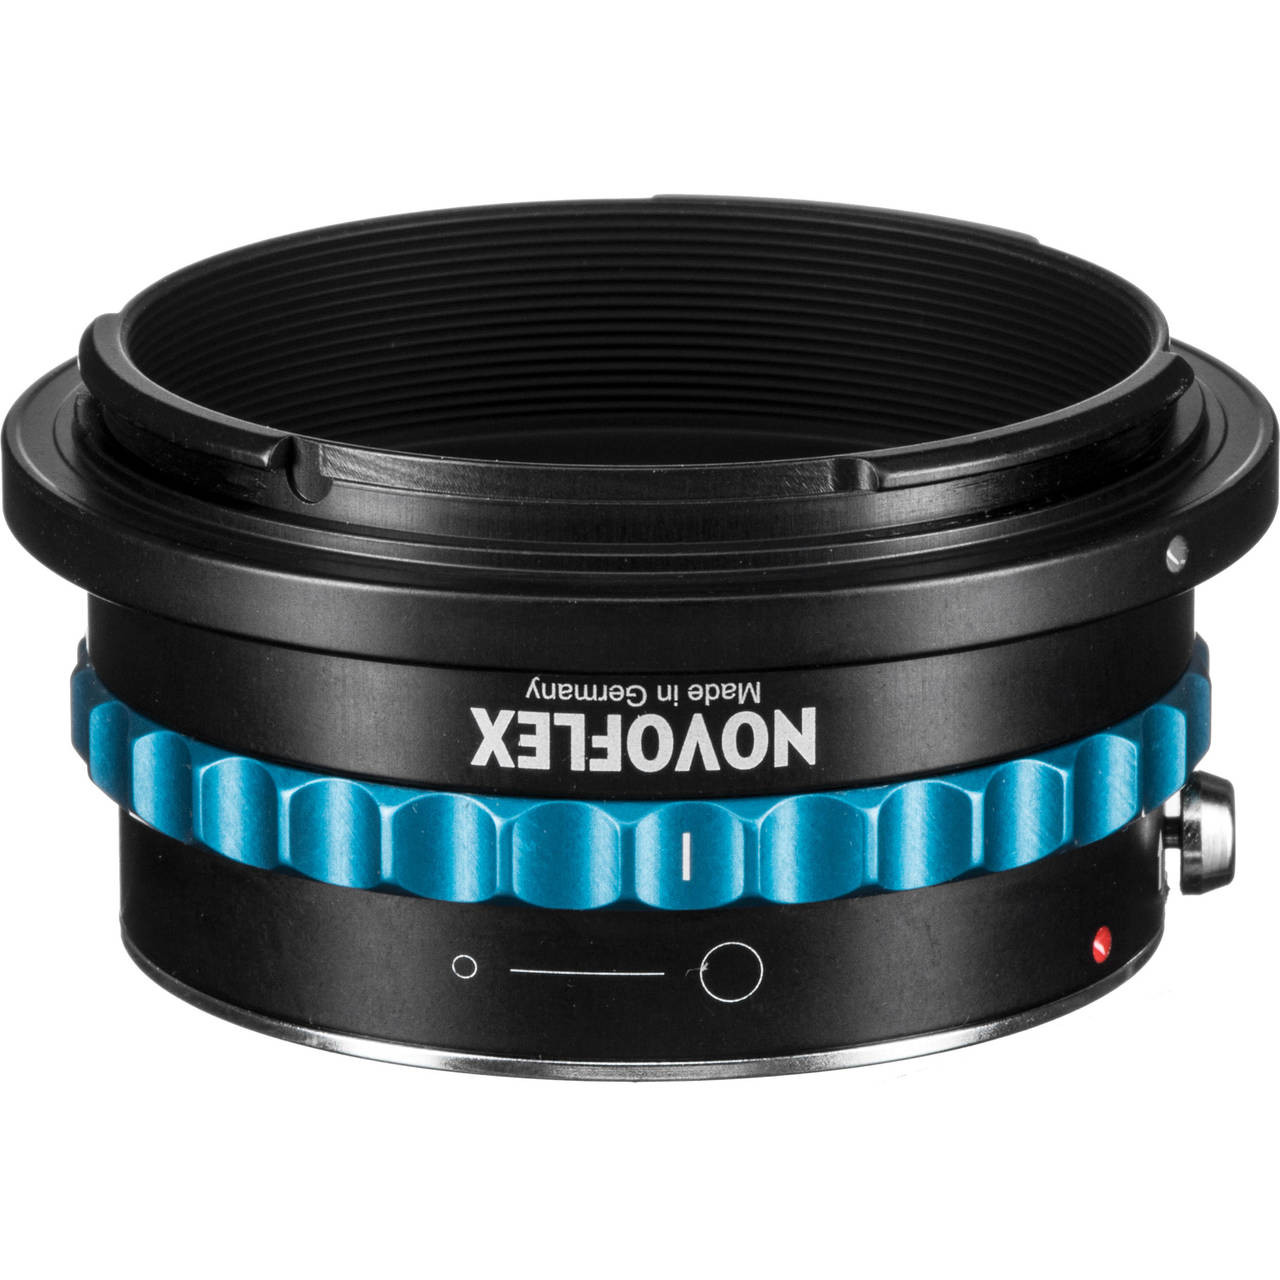 Novoflex Nikon F Lens to Hasselblad X-Mount Camera Adapter at